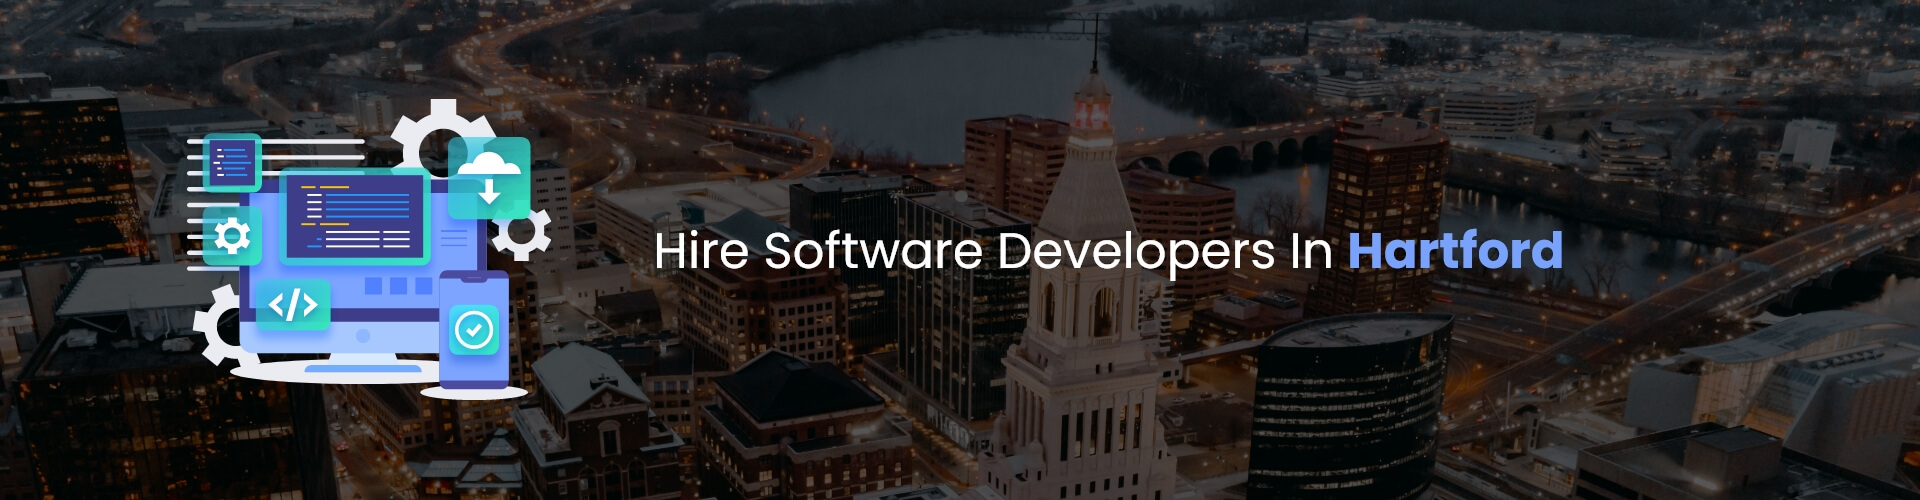 hire software developers in hartford